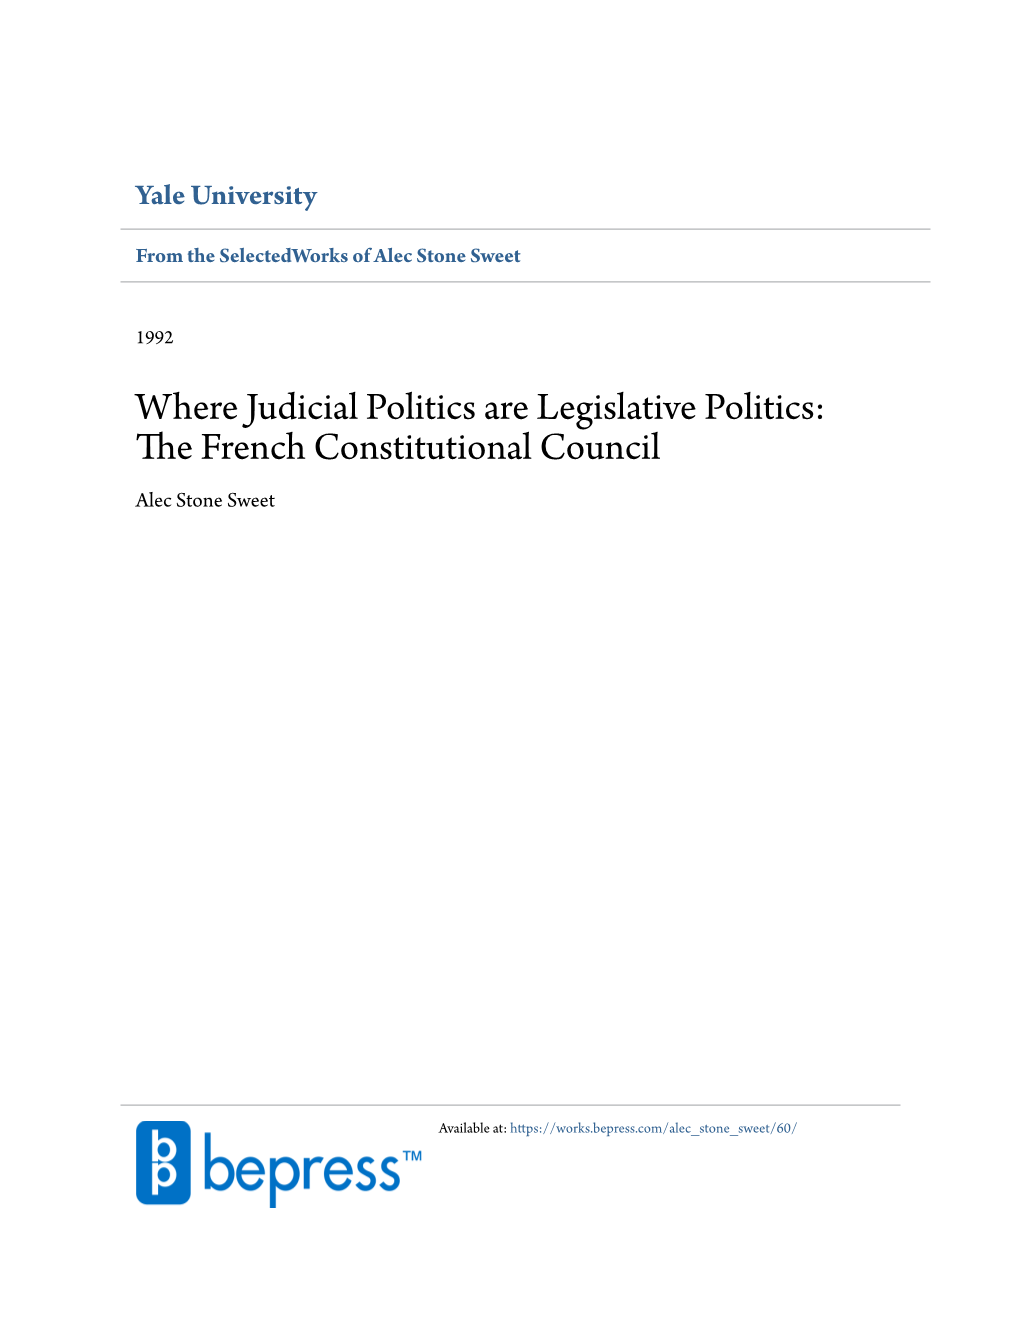 Where Judicial Politics Are Legislative Politics: the French Constitutional Council